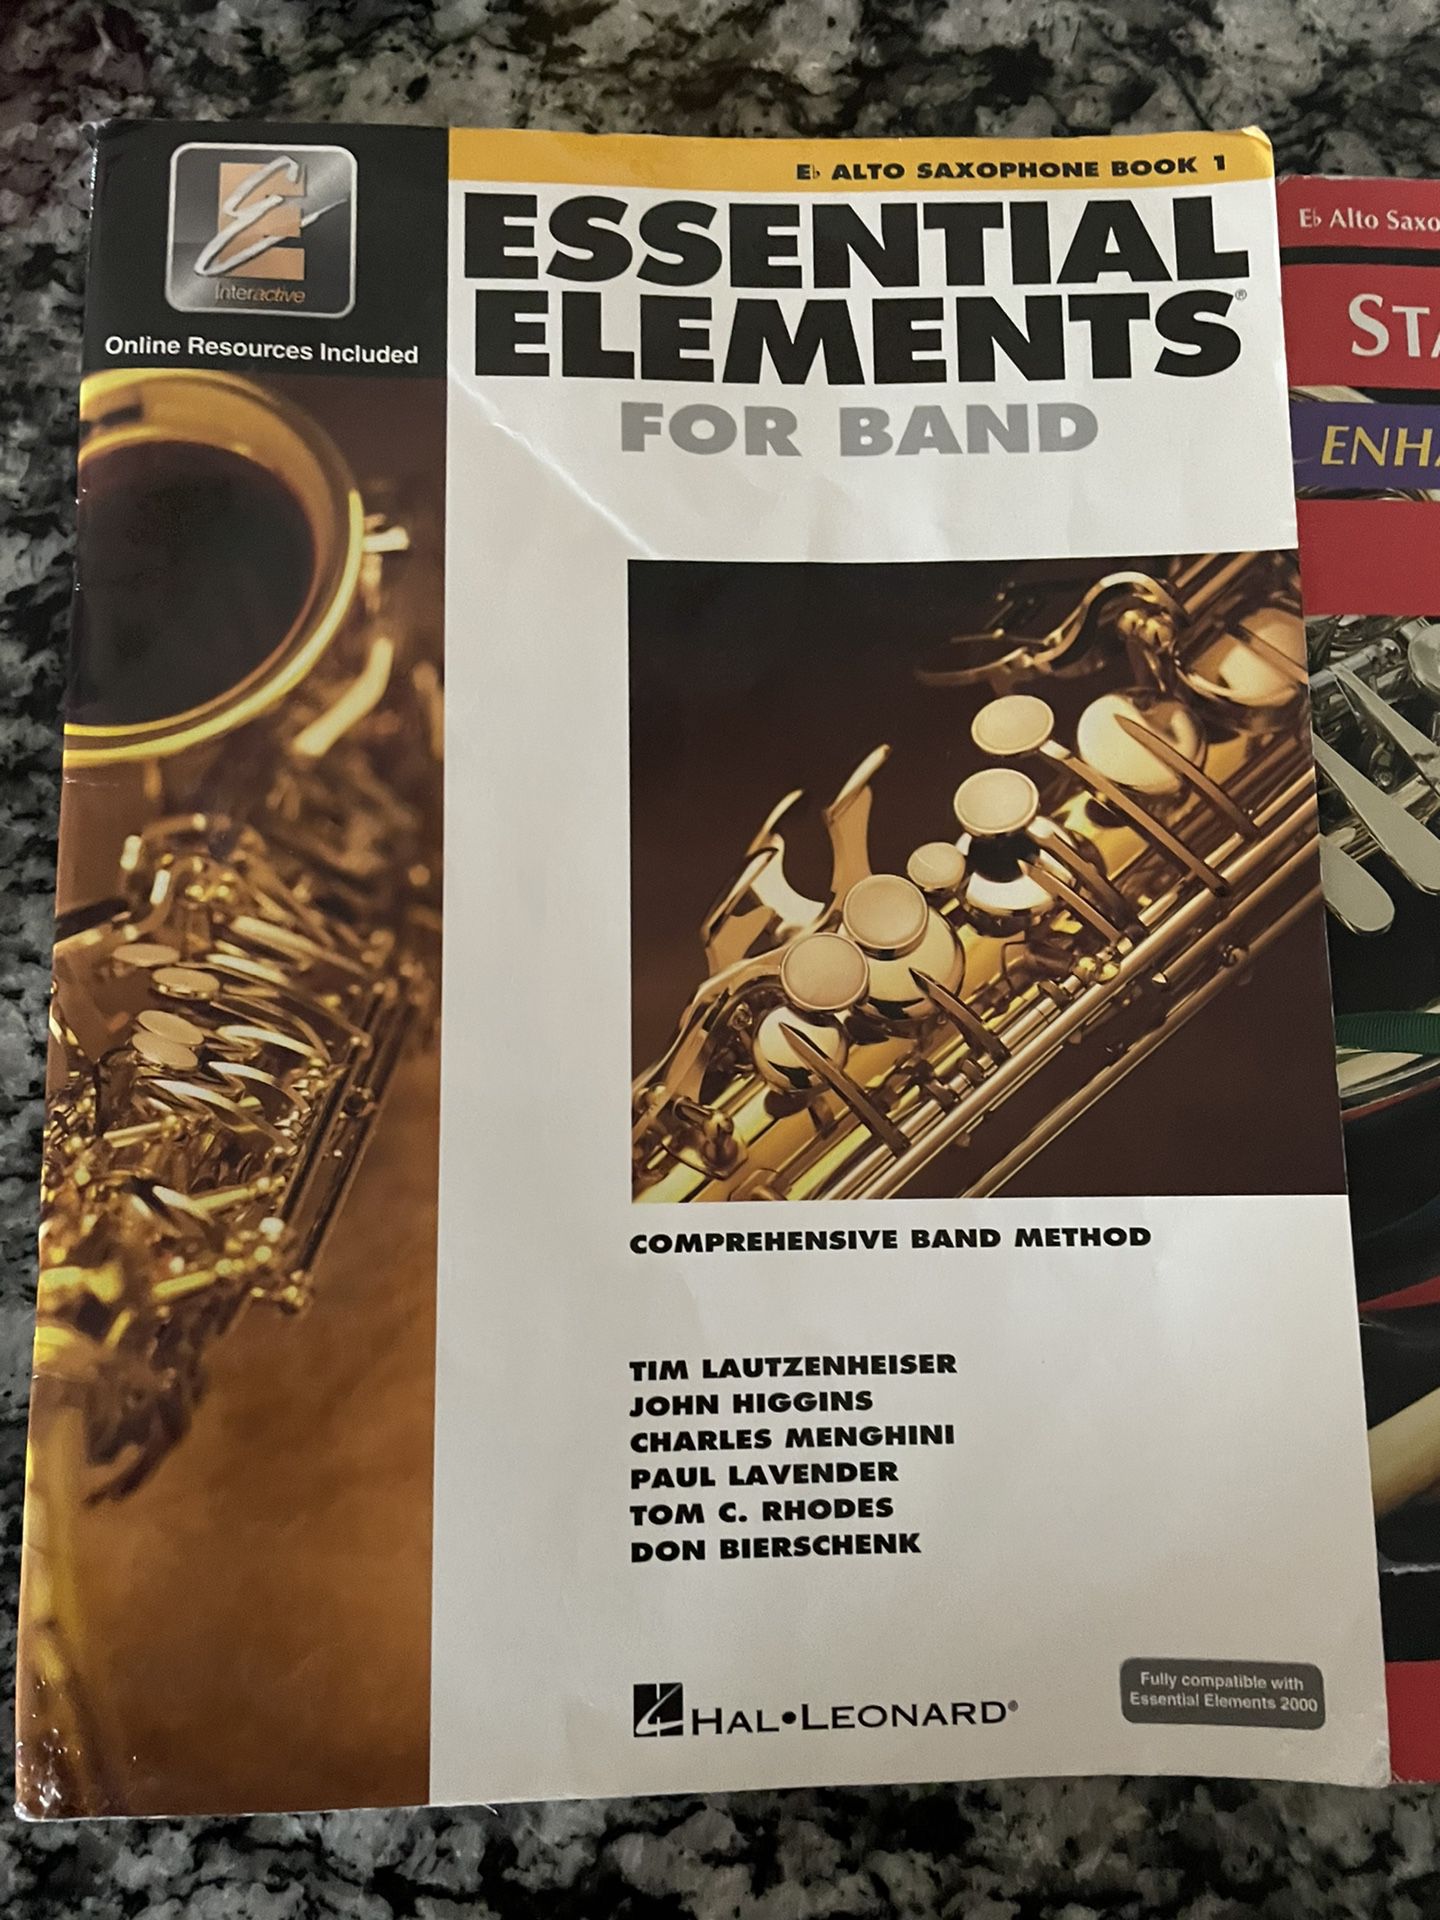 Alto Saxophone Books